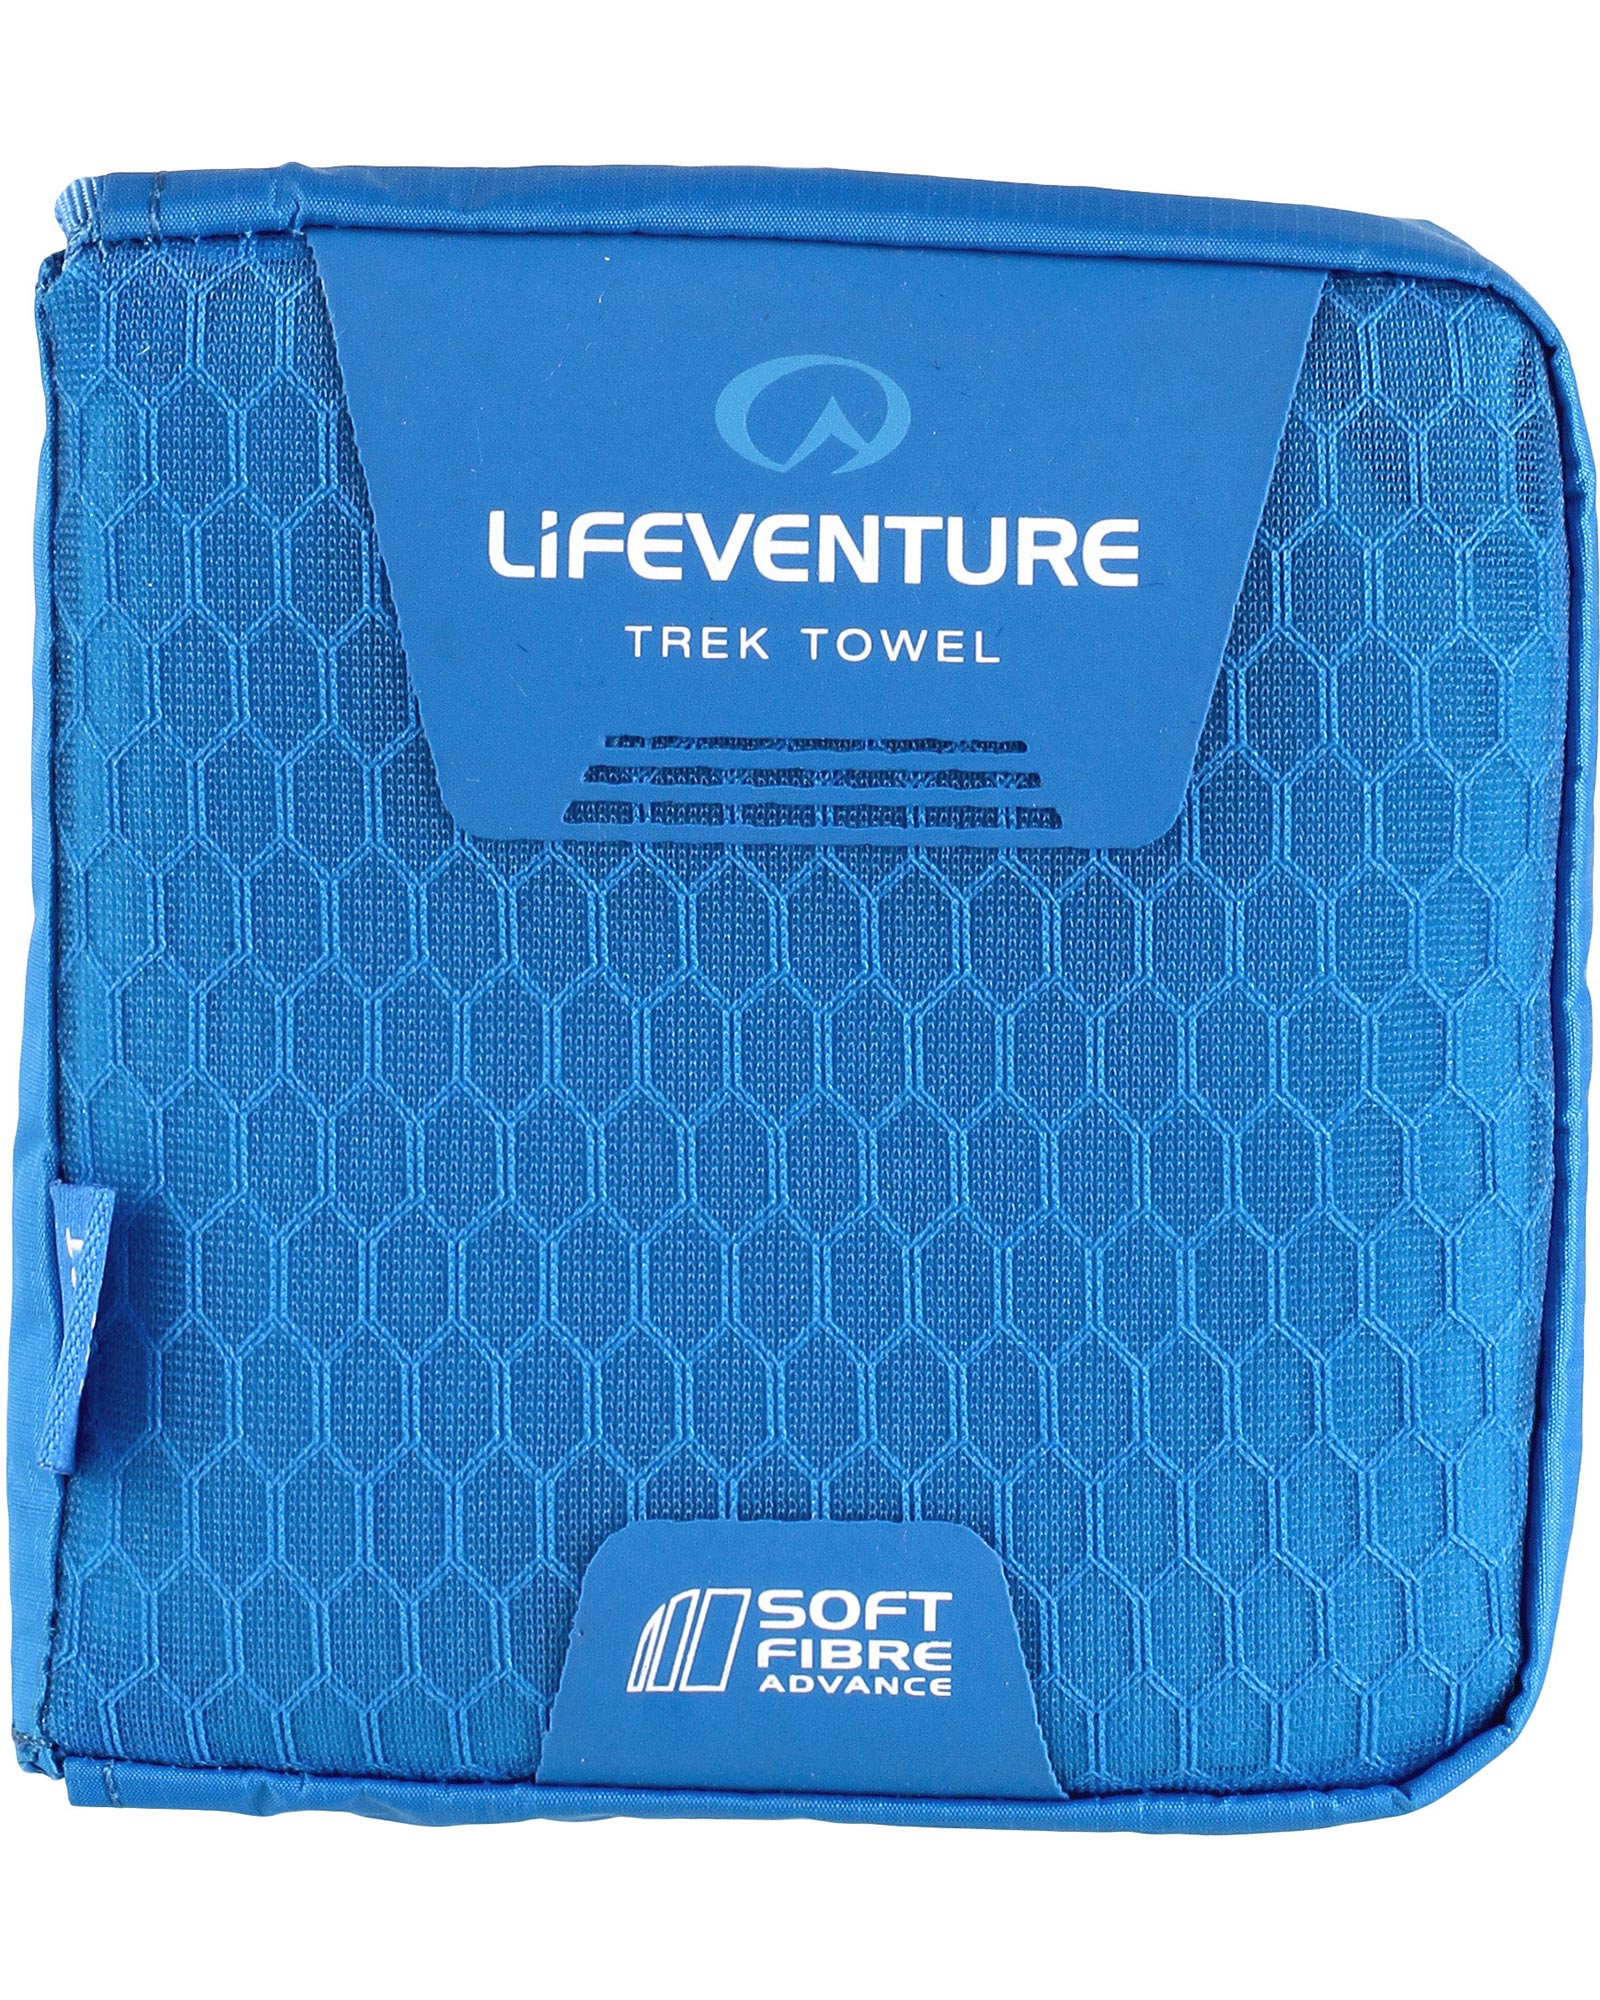 Product image of Lifeventure Soft Fibre Trek Towel - Pocket